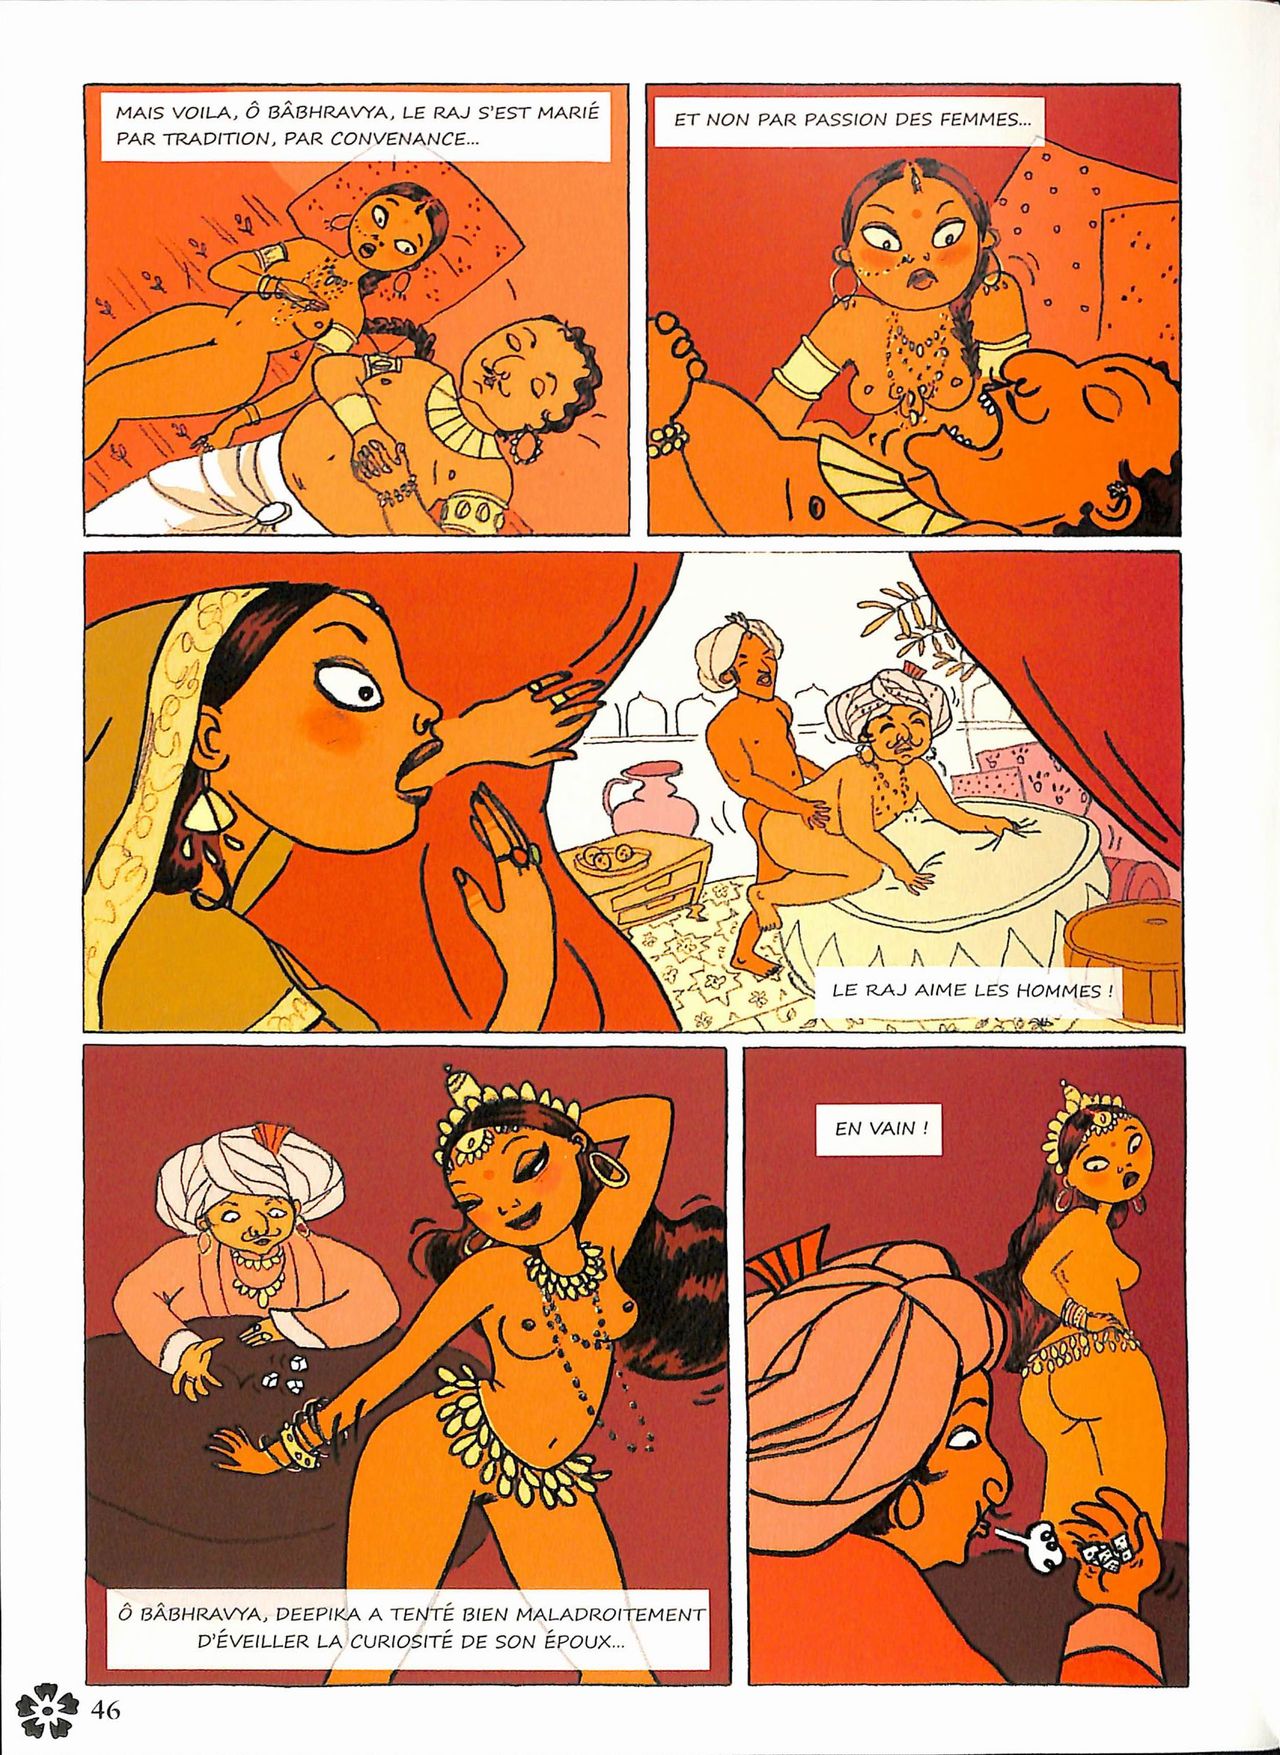 Kama Sutra en bandes dessinées - Kama Sutra with Comics numero d'image 47